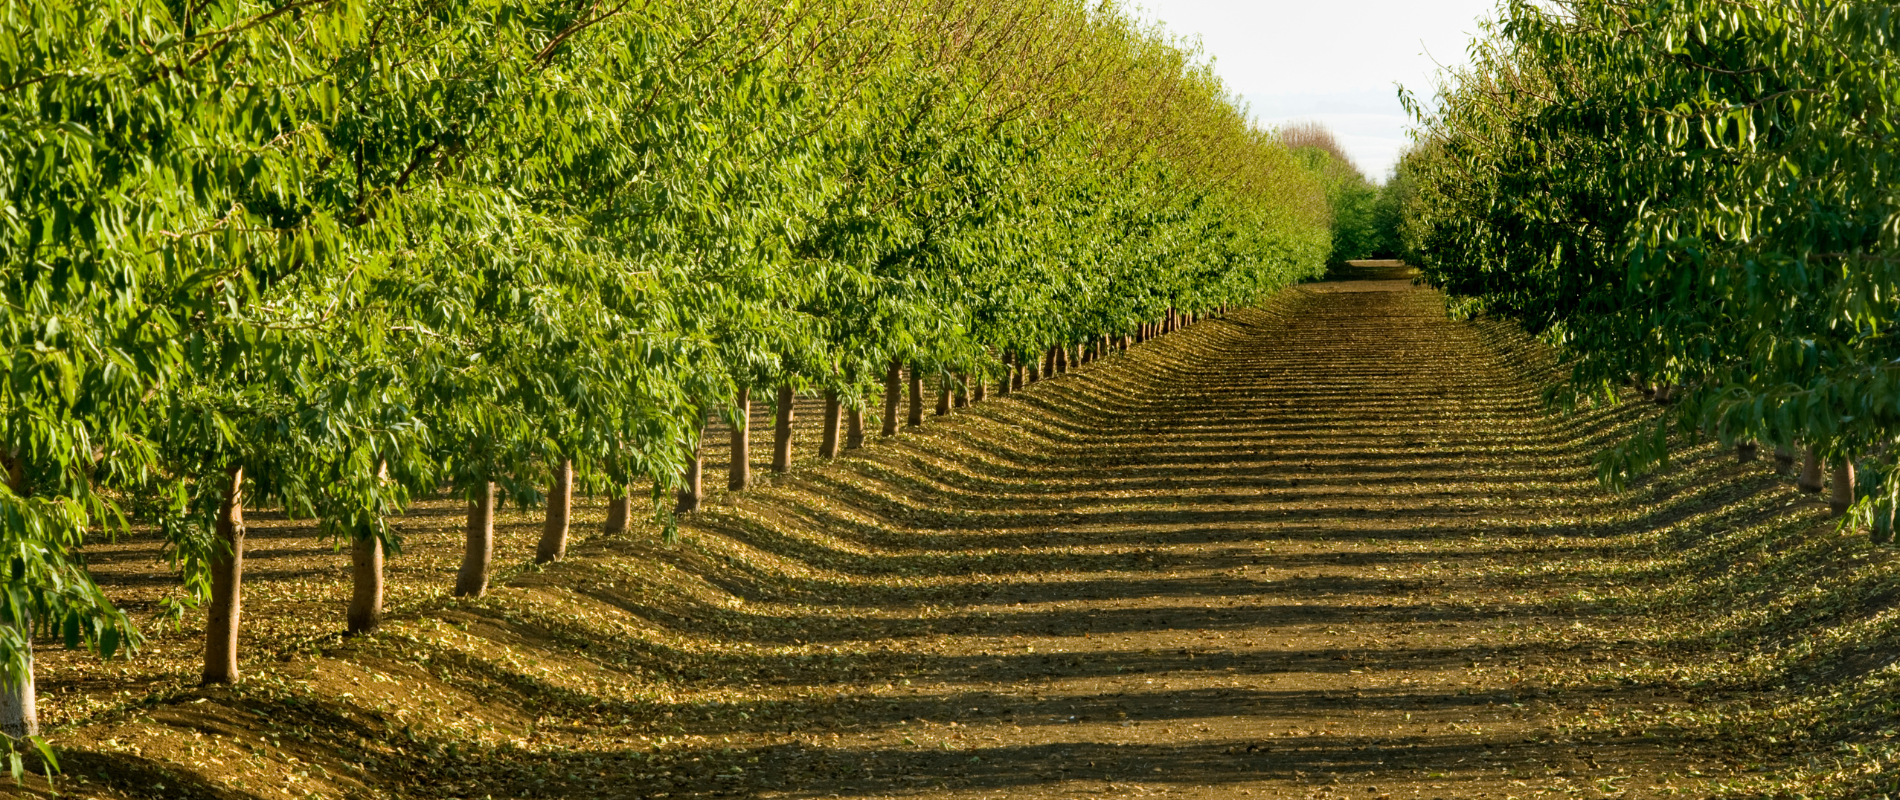 California almond trees